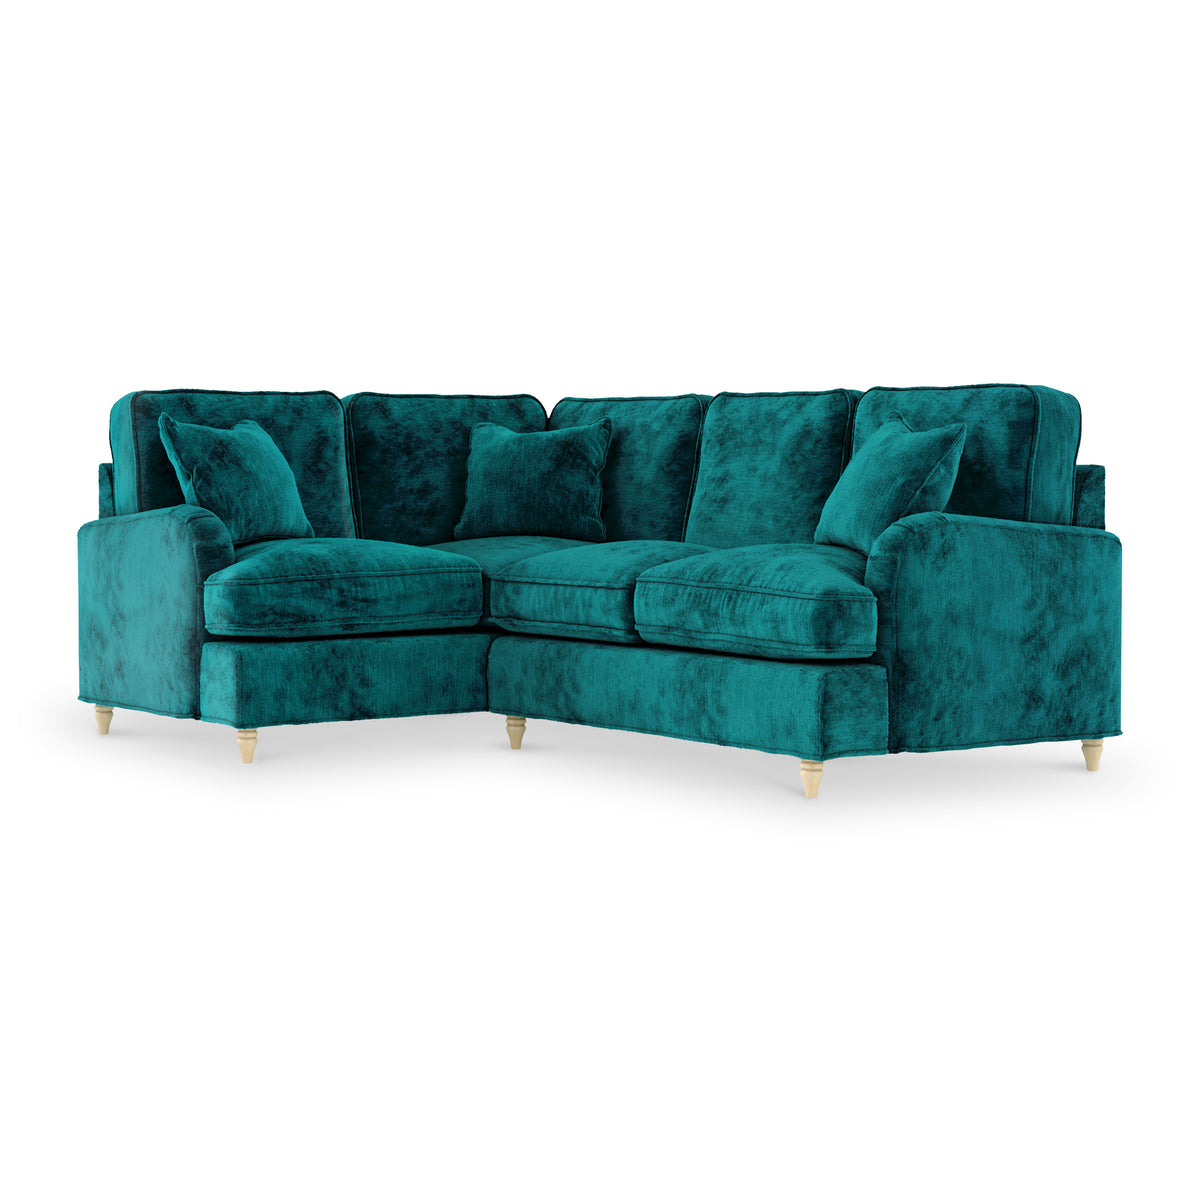 Arthur Emerald Green LH Corner Sofa from roseland furniture